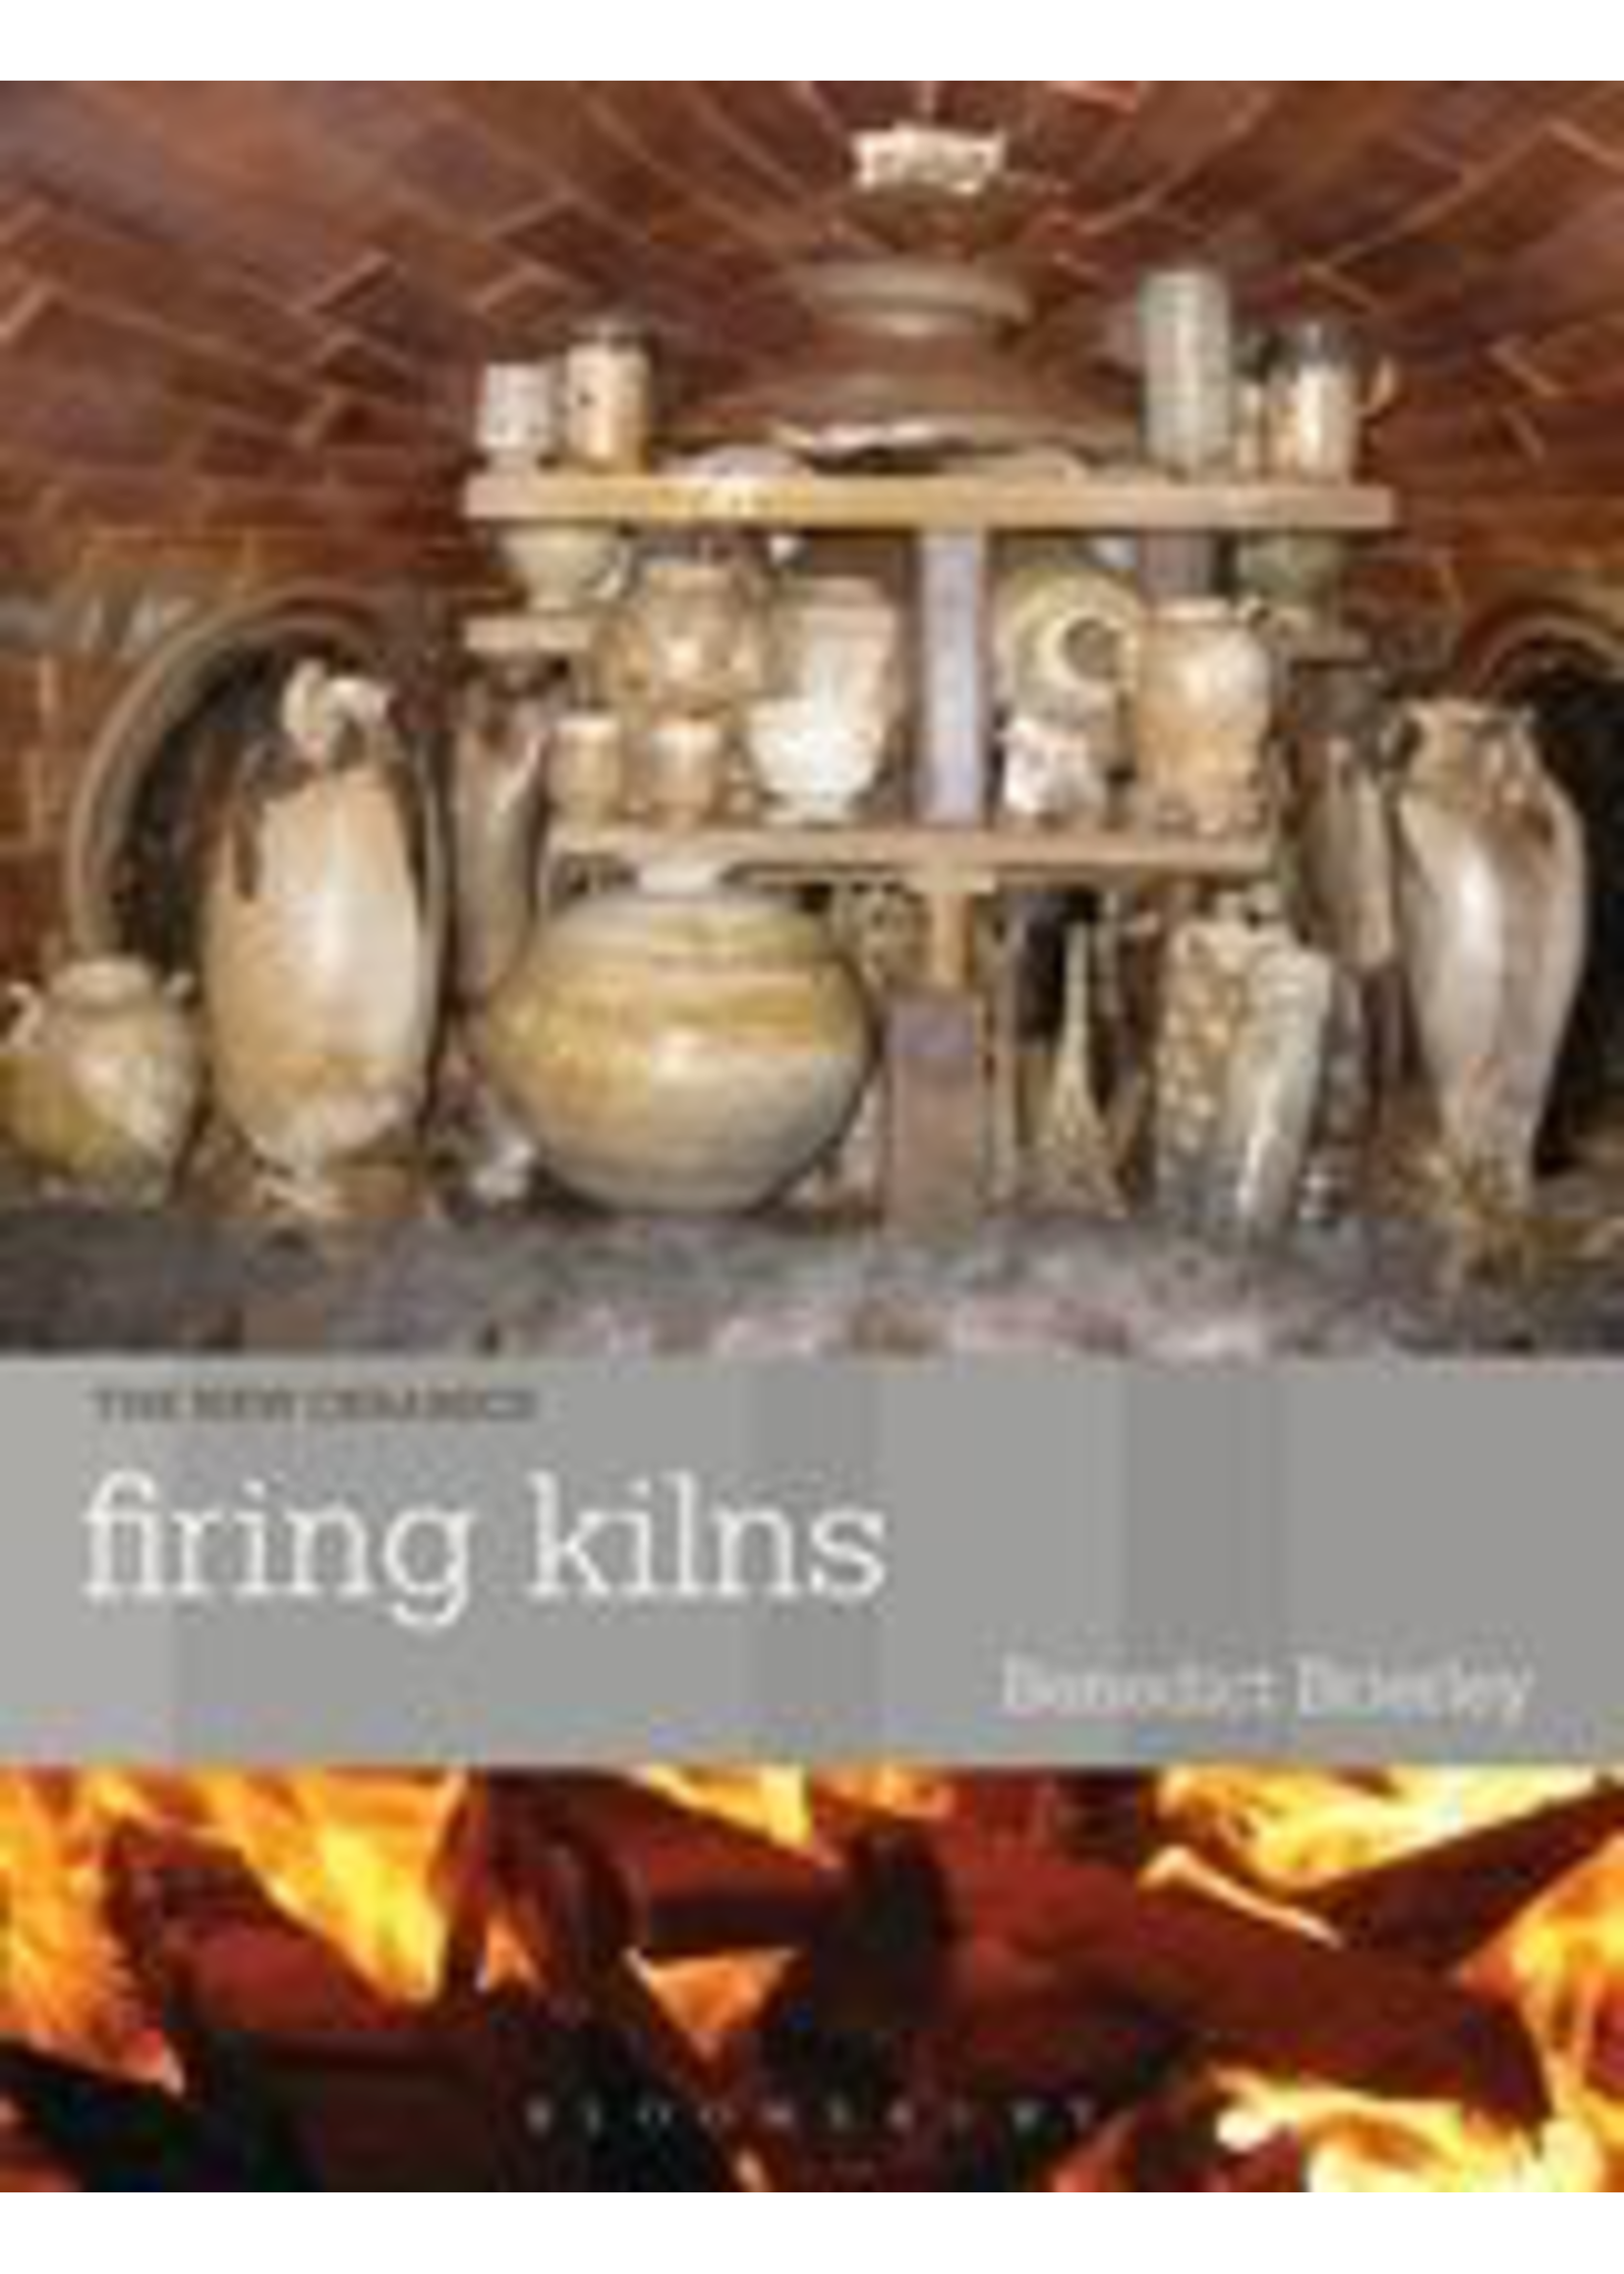 Firing Kilns